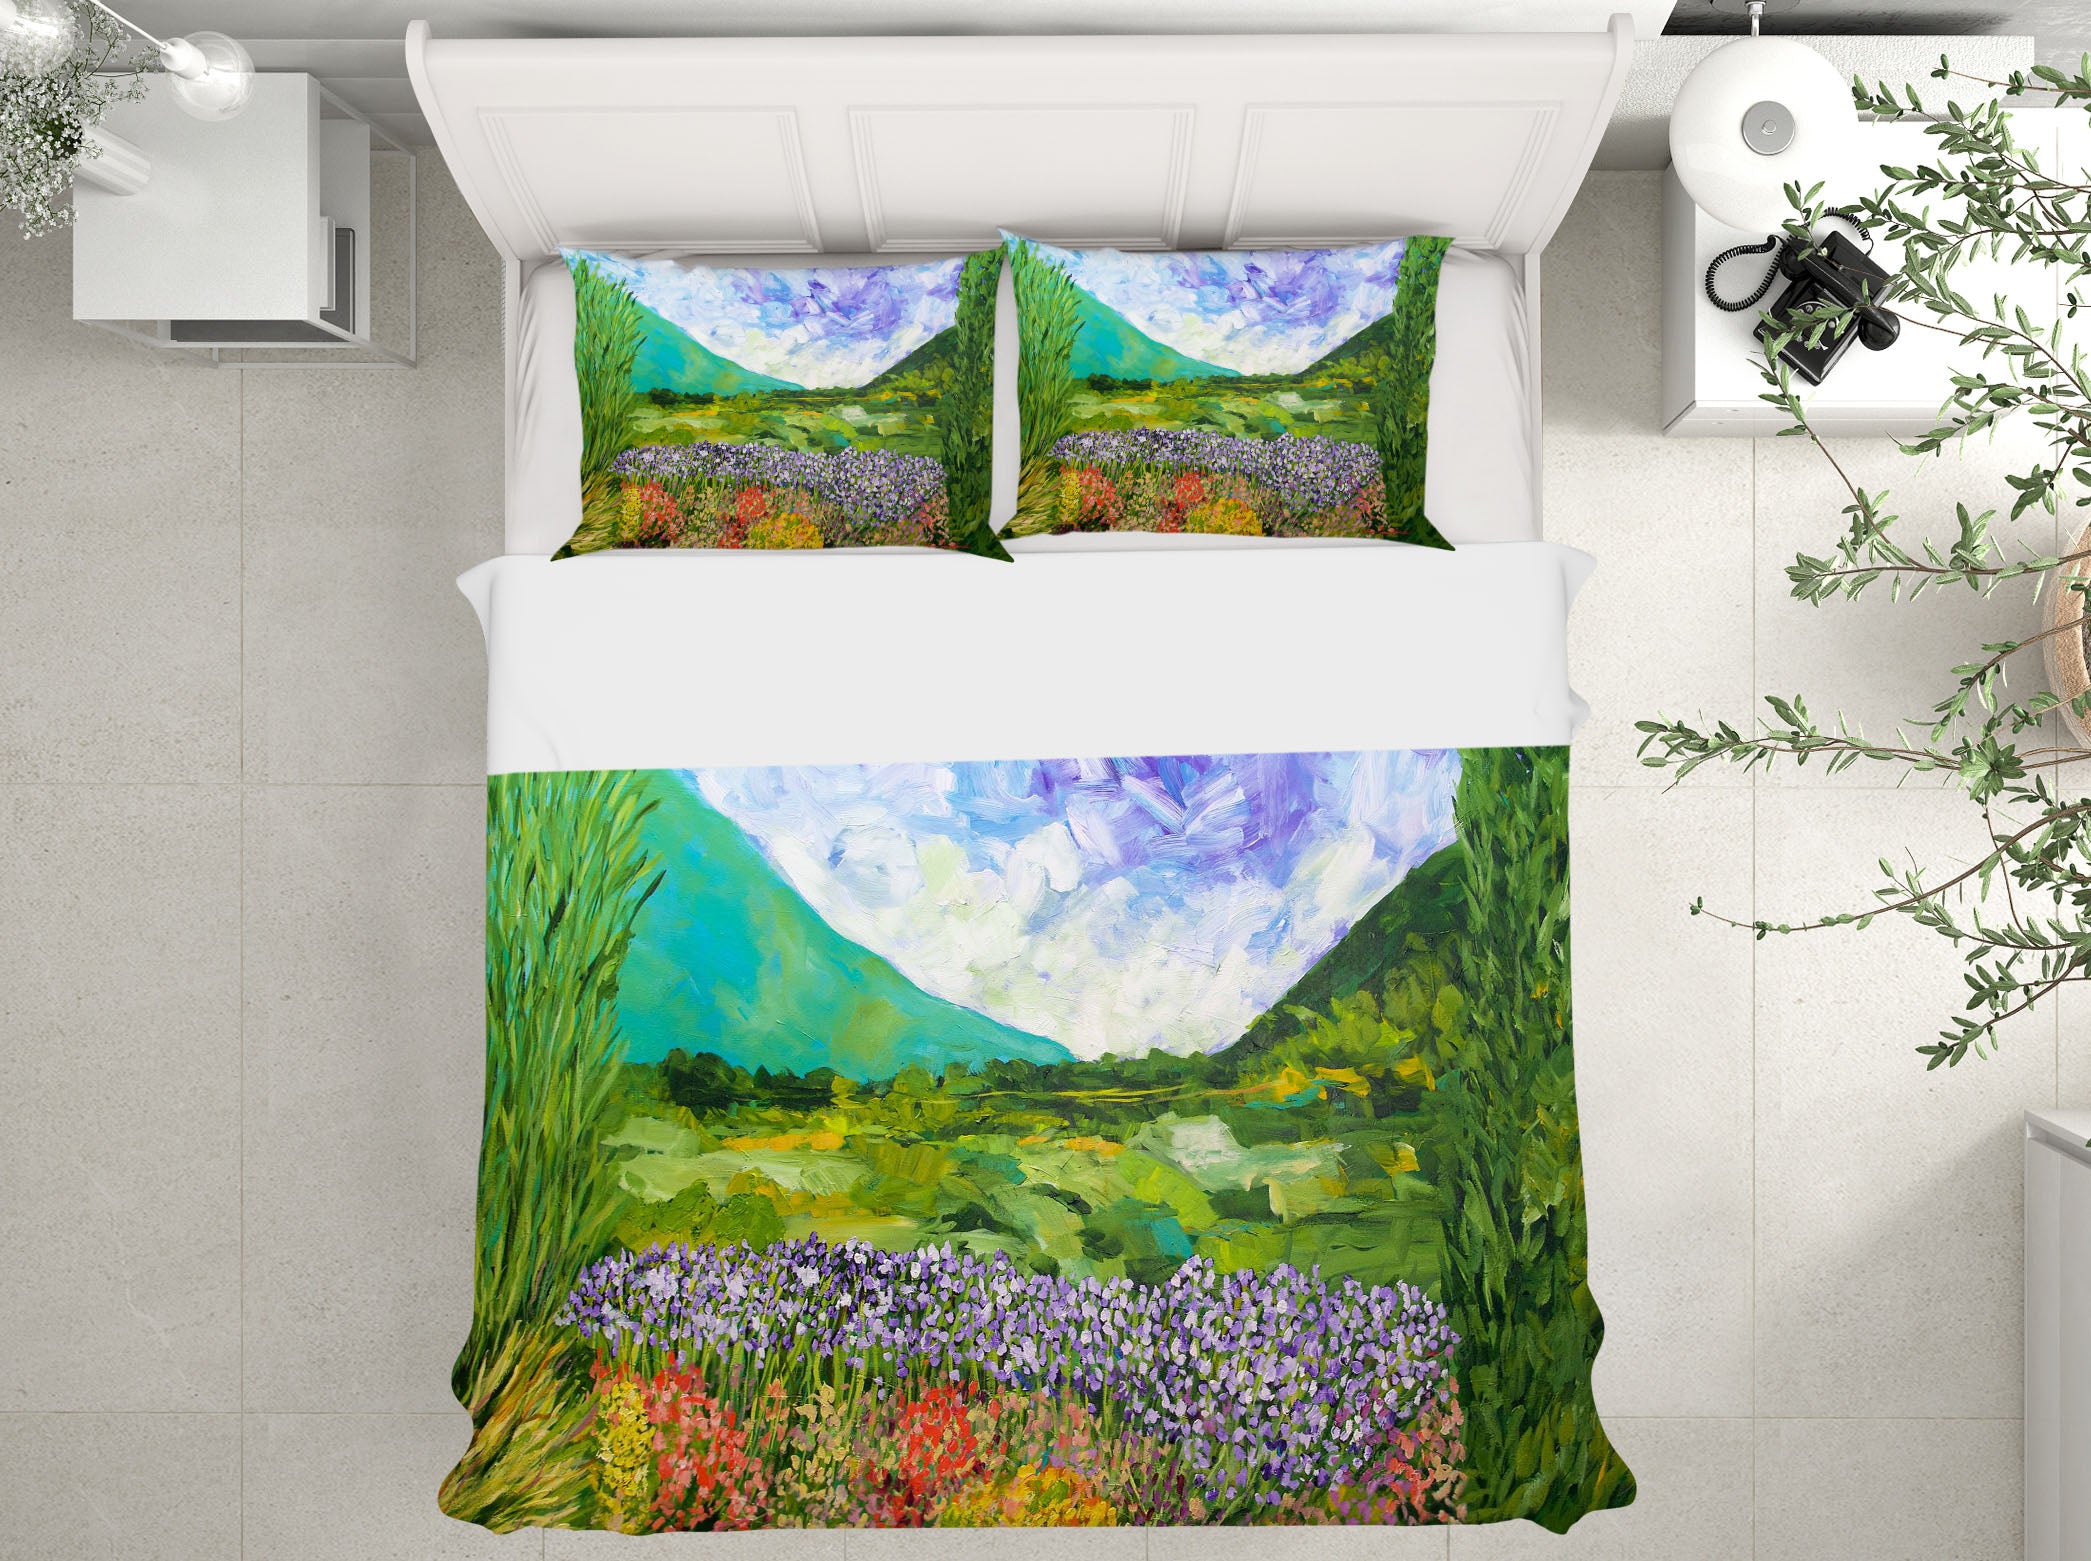 3D River Bend 1143 Allan P. Friedlander Bedding Bed Pillowcases Quilt